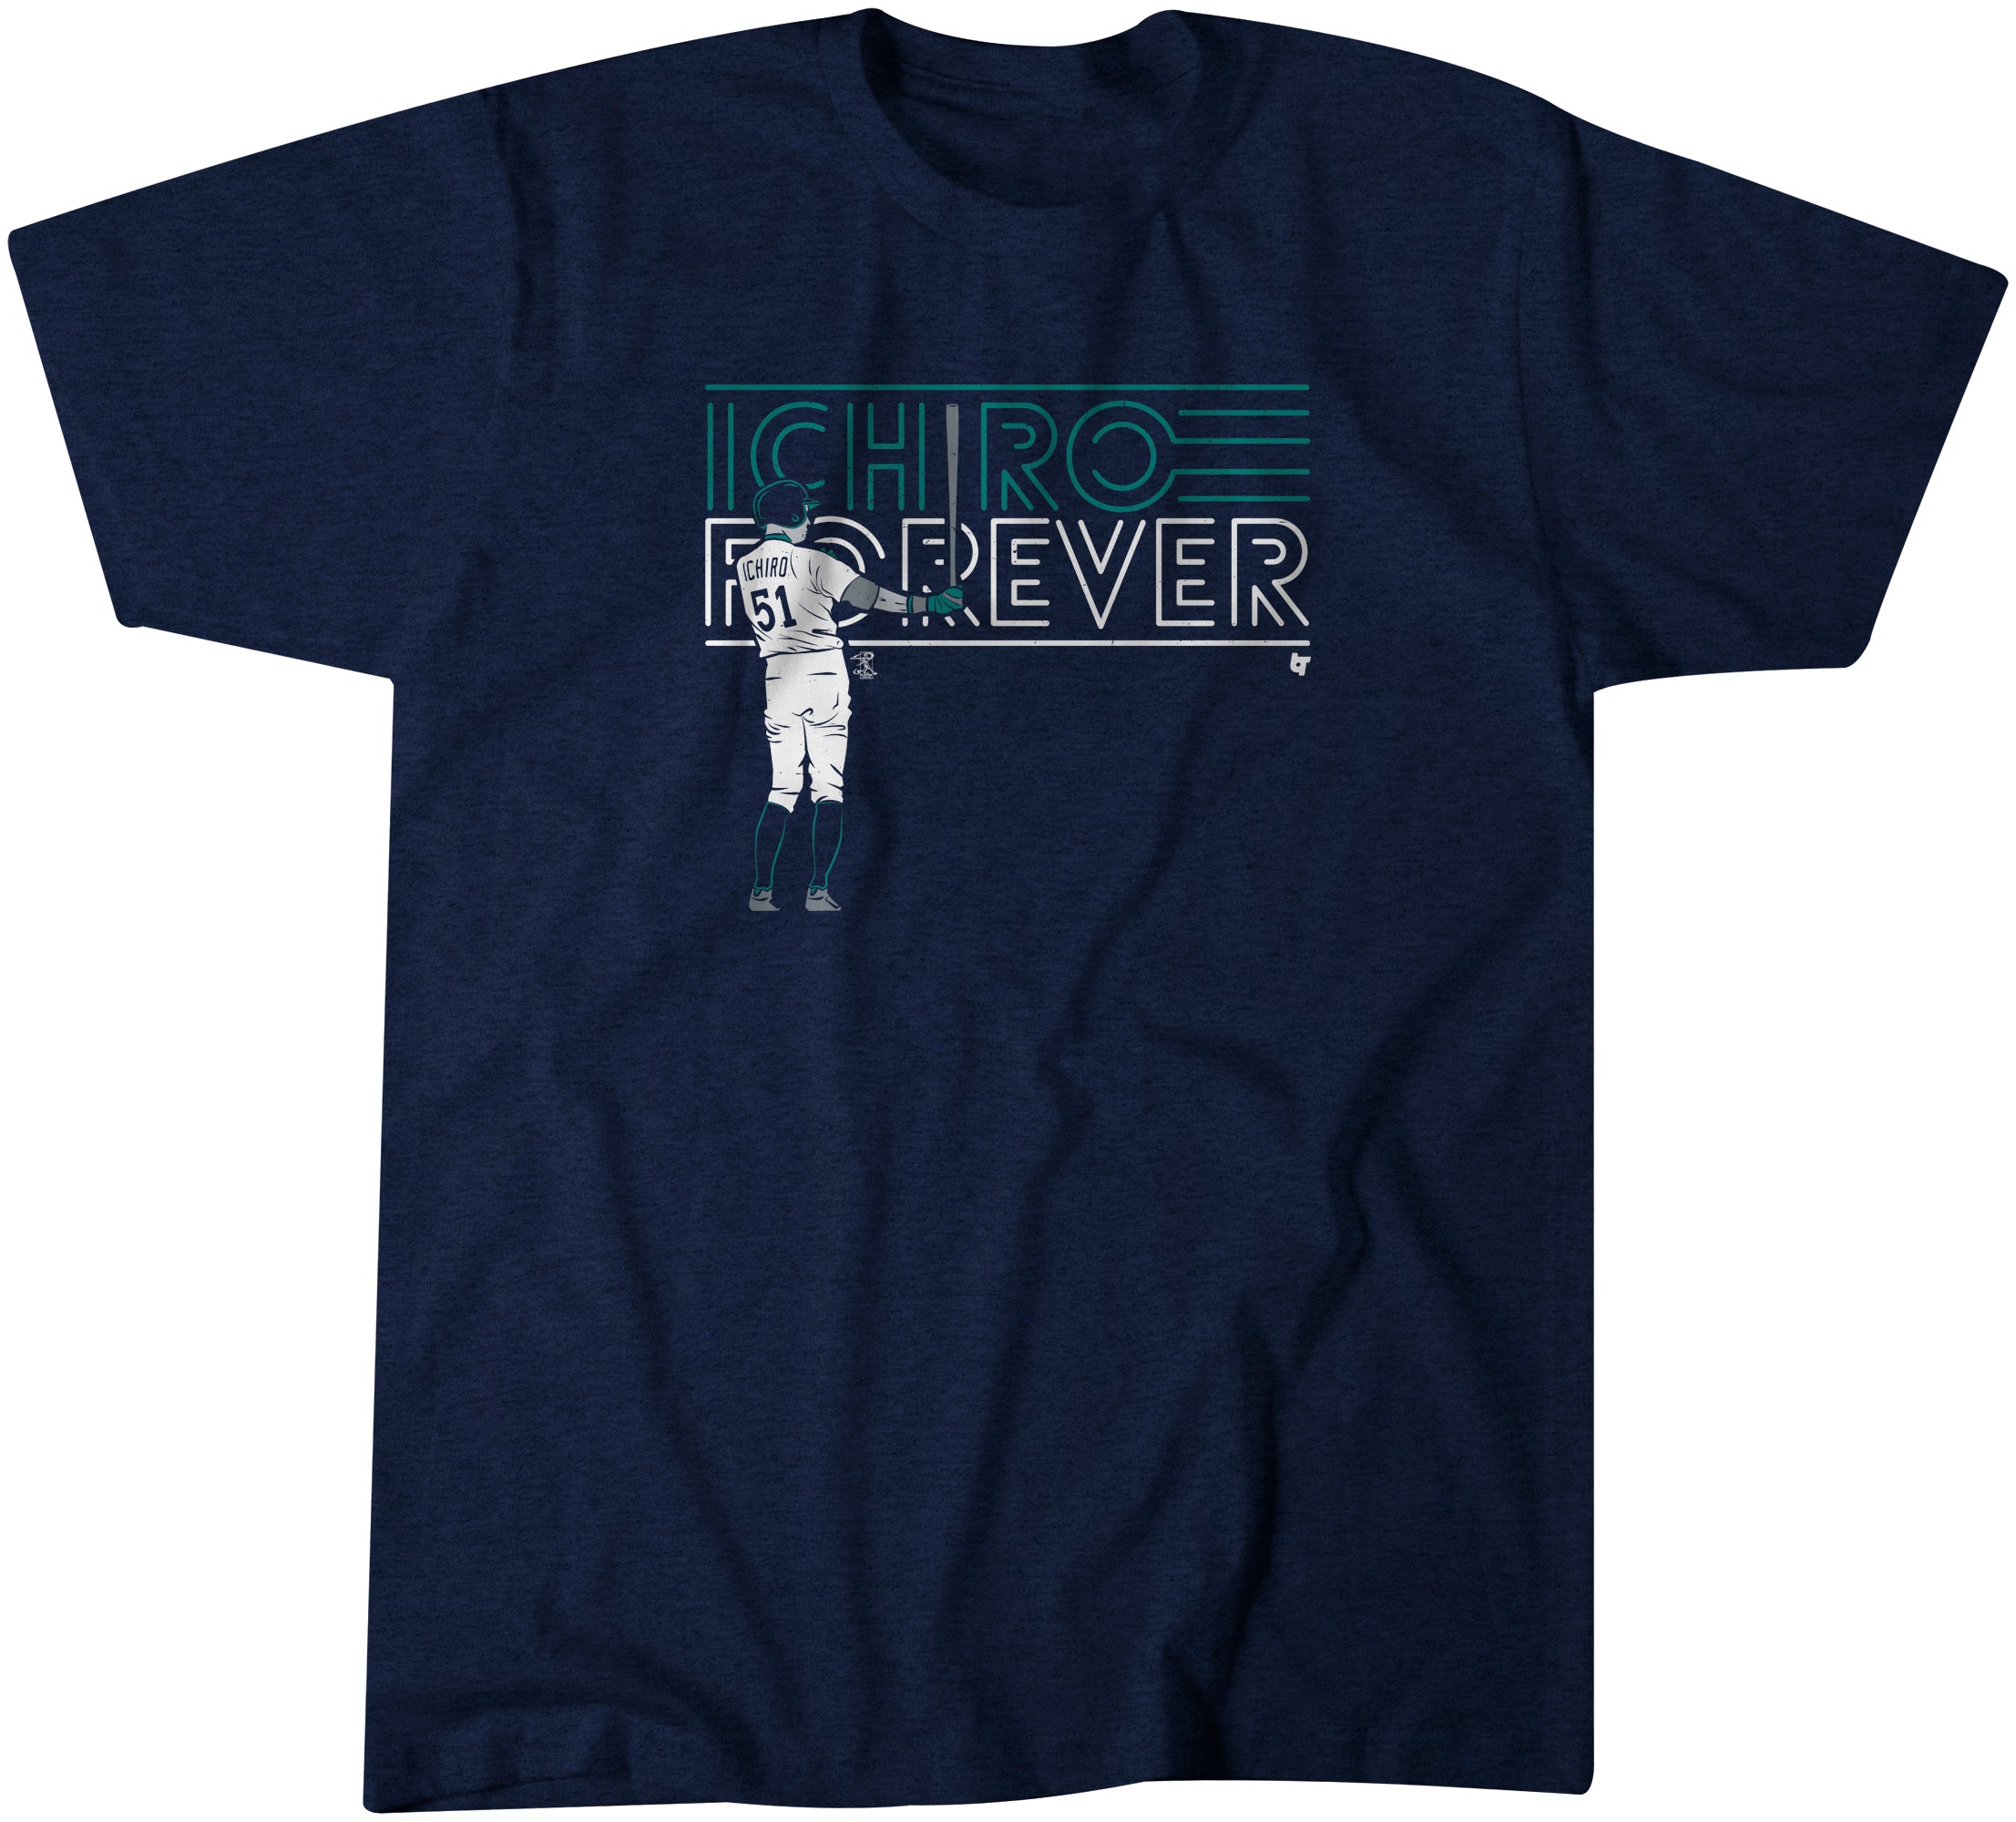 Ichiro Forever, 3XL / Adult T-Shirt - MLB - Navy Blue - Sports Fan Gear | breakingt